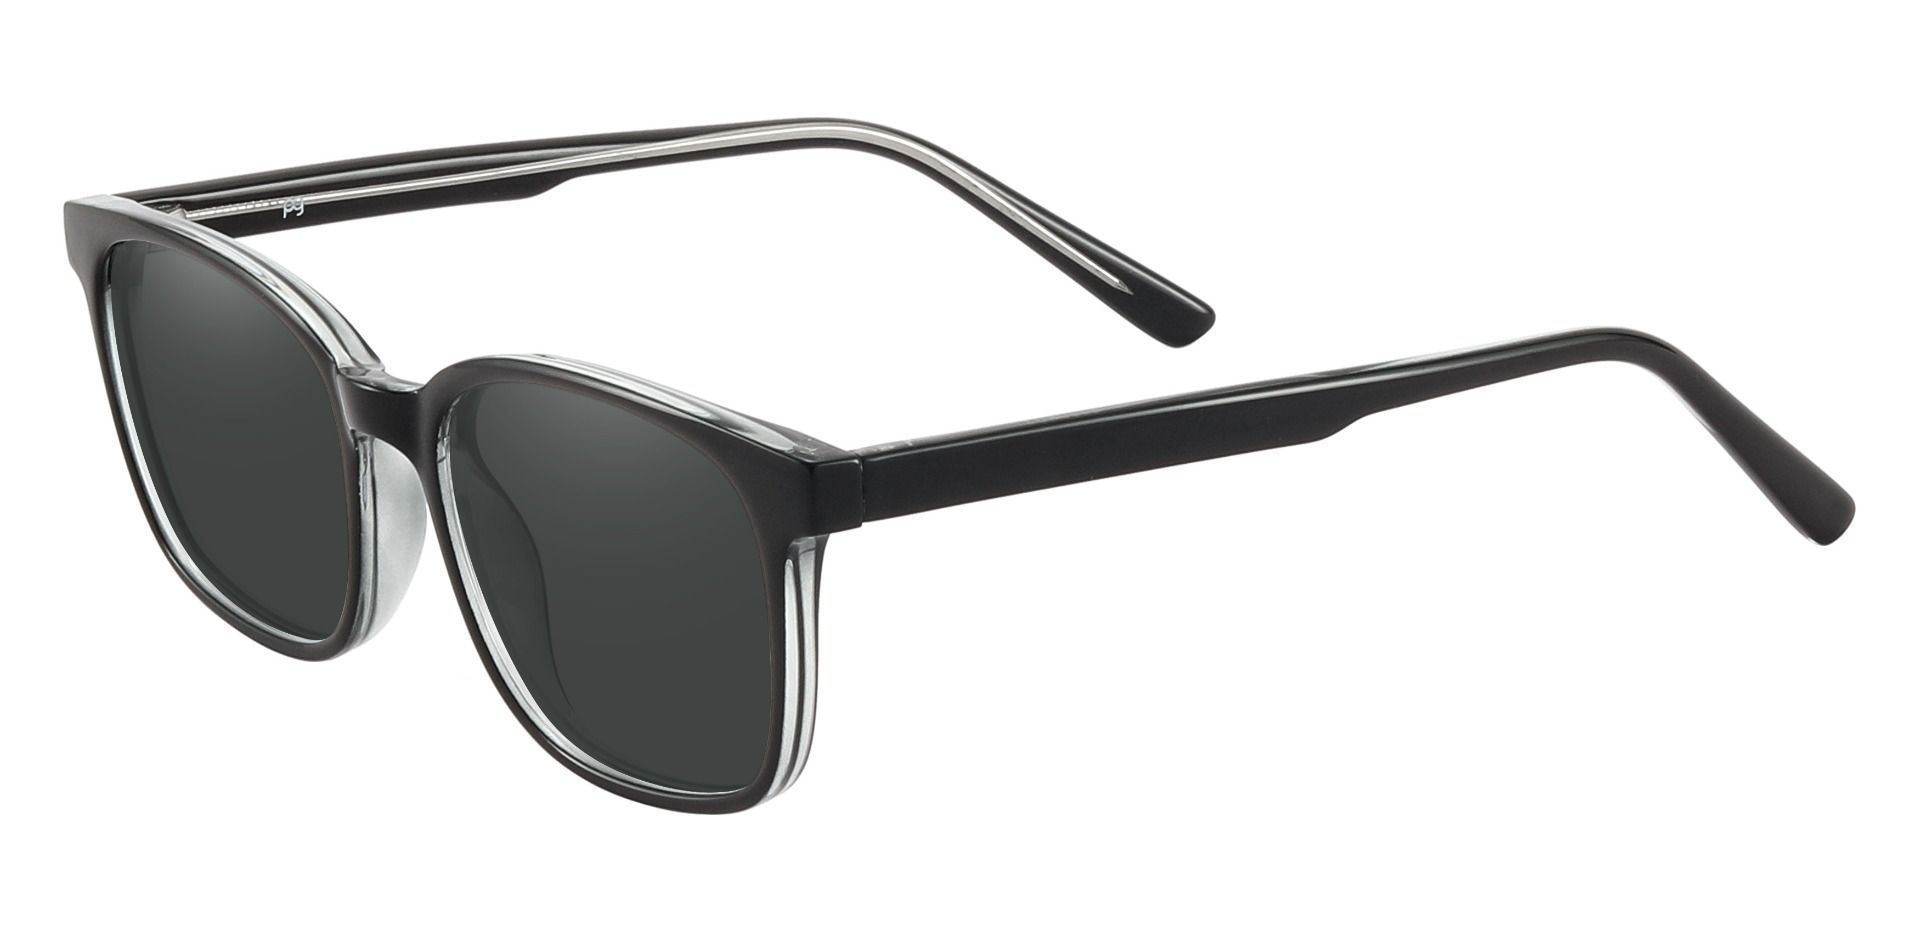 Windsor Rectangle Lined Bifocal Sunglasses - Black Frame With Gray Lenses